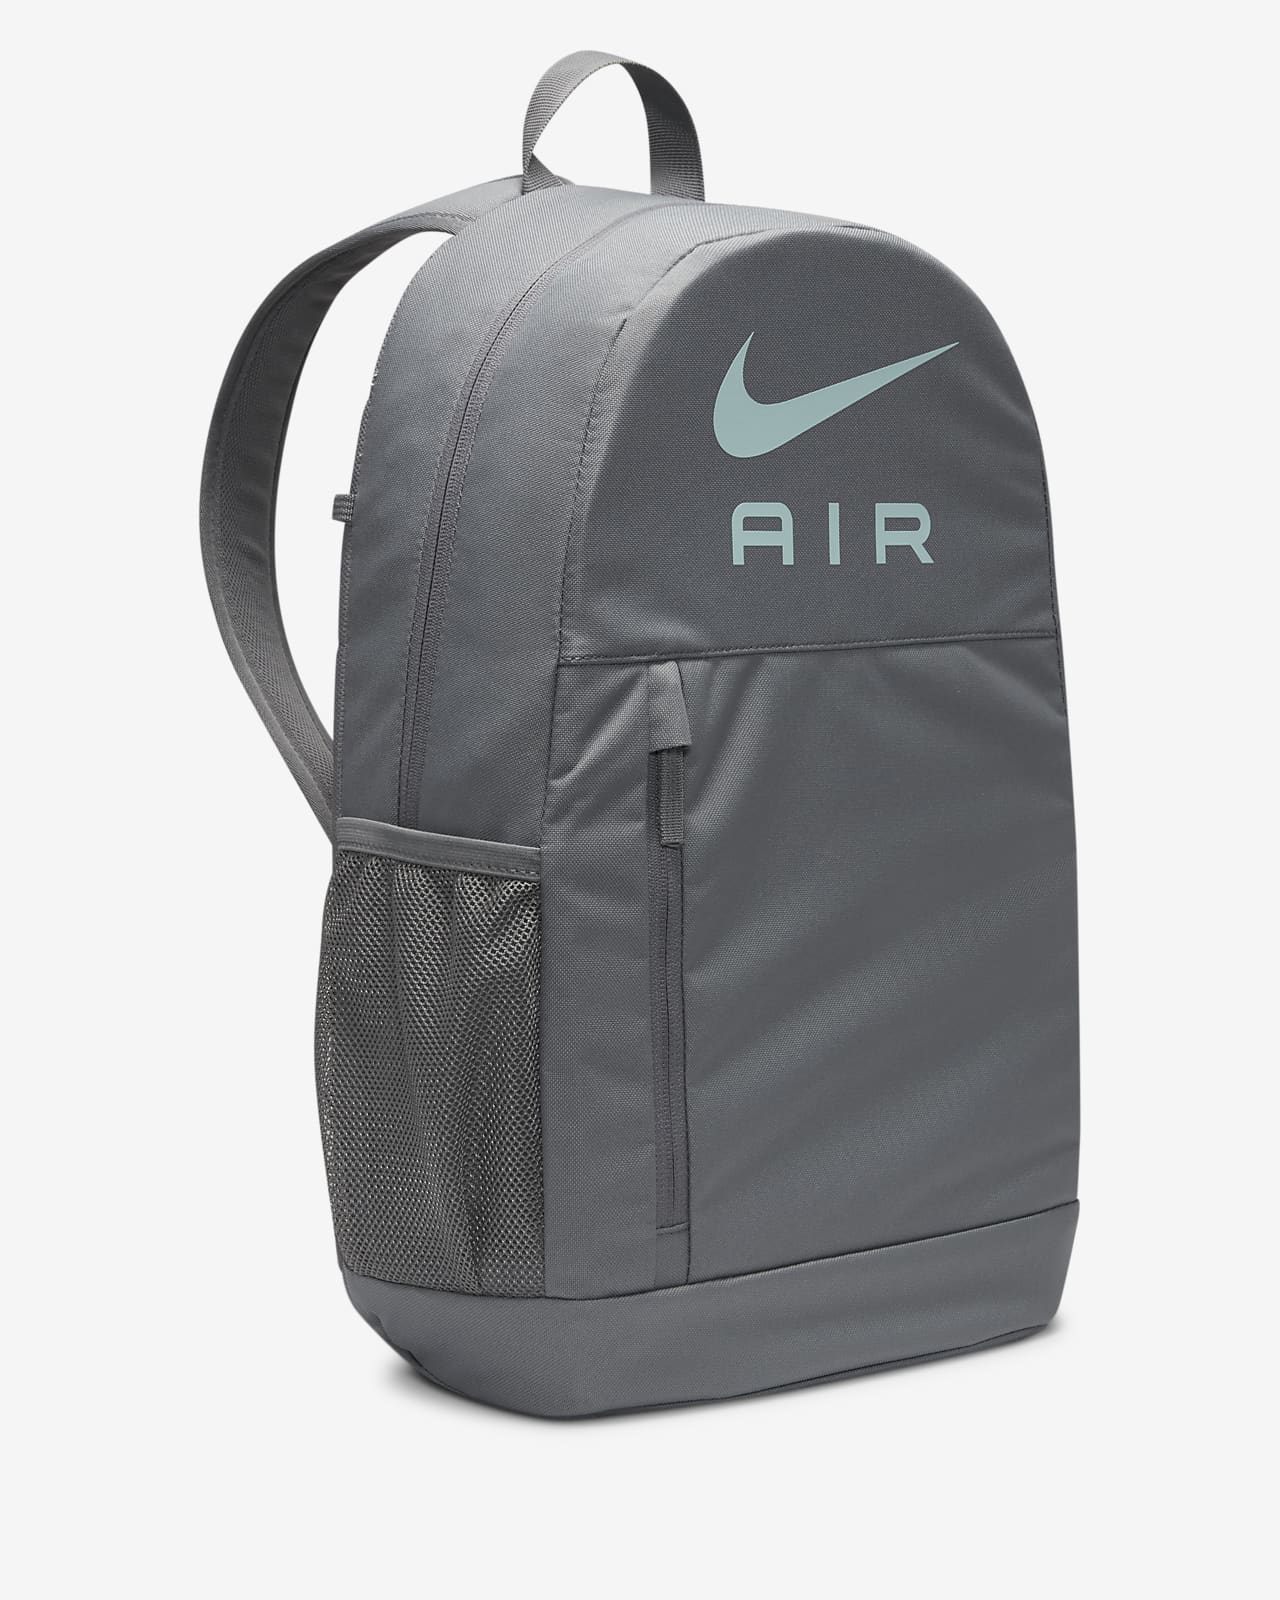 Nike 25 Ltrs ObsidianBlackWolf Grey School Backpack BA4862452   Amazonin Fashion